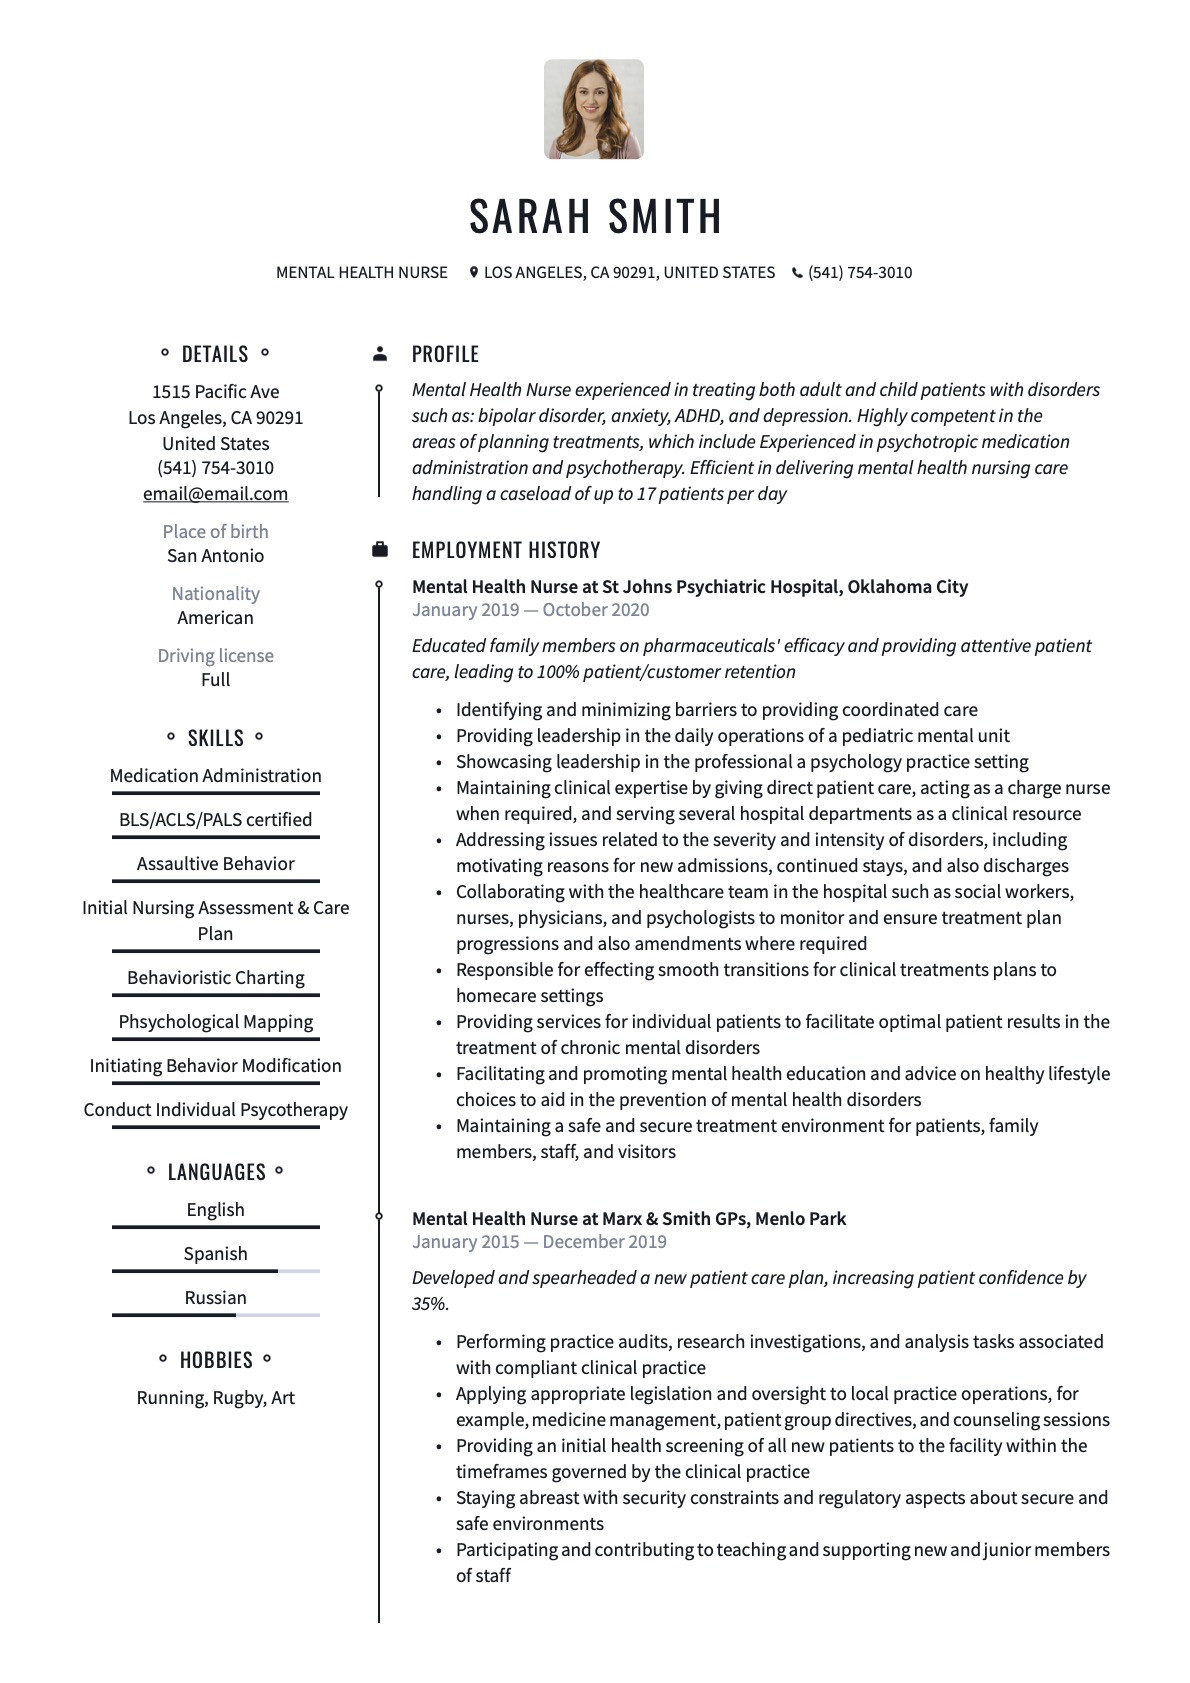 Sample Resume for Psychiatric Long Term Care Nurse Mental Health Nurse Resume & Guide  20 Free Templates